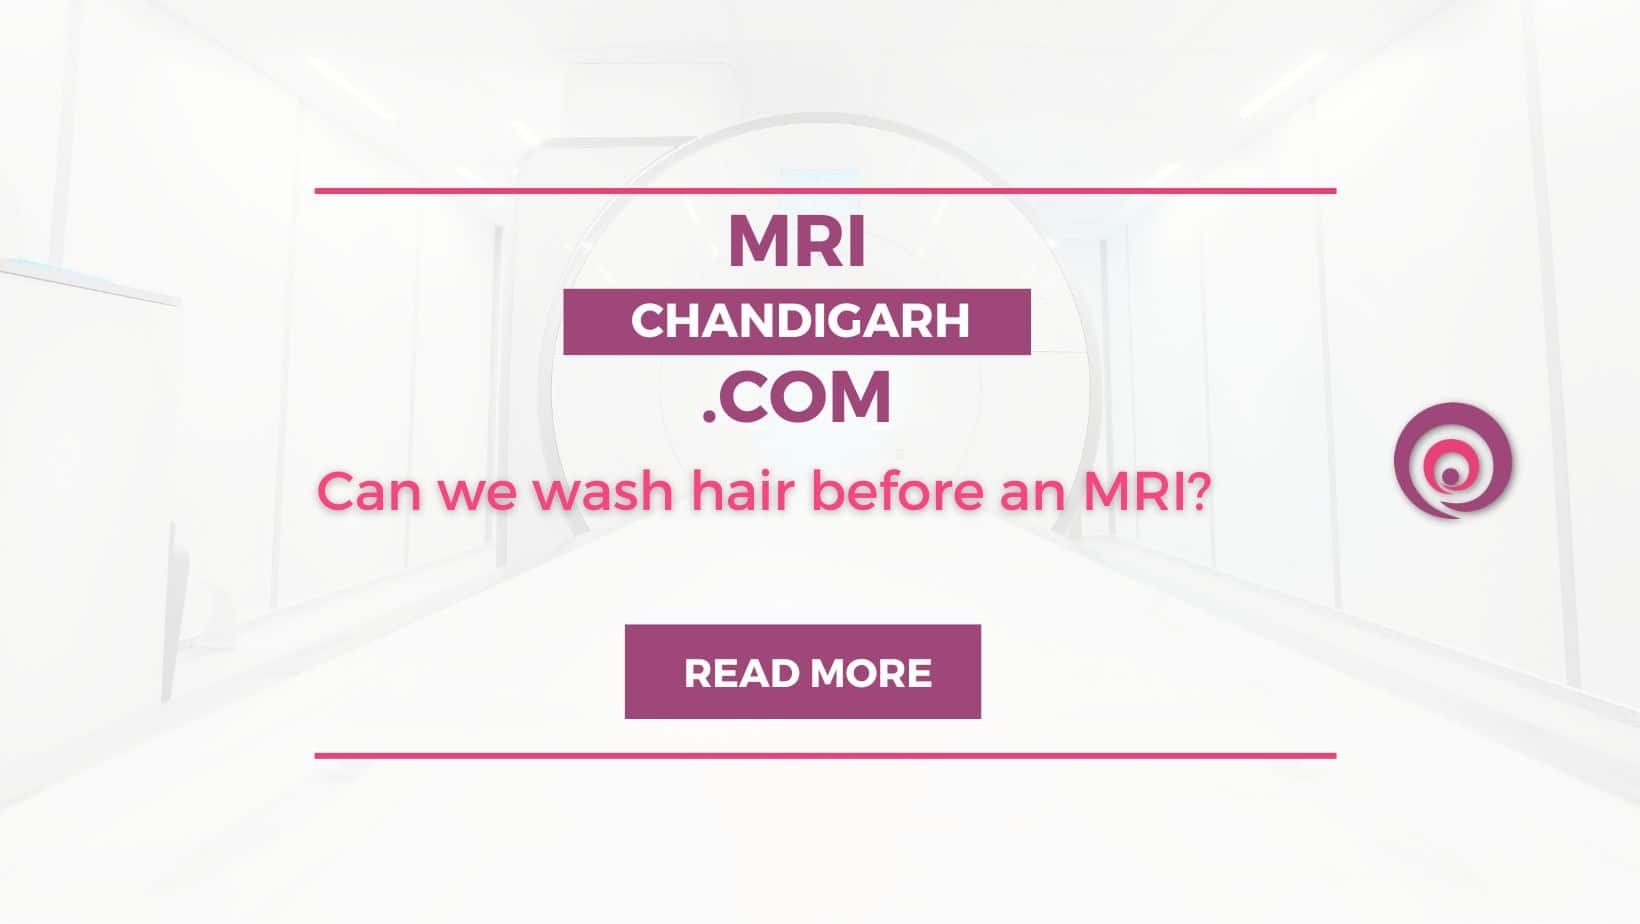 Can we wash hair before an MRI?